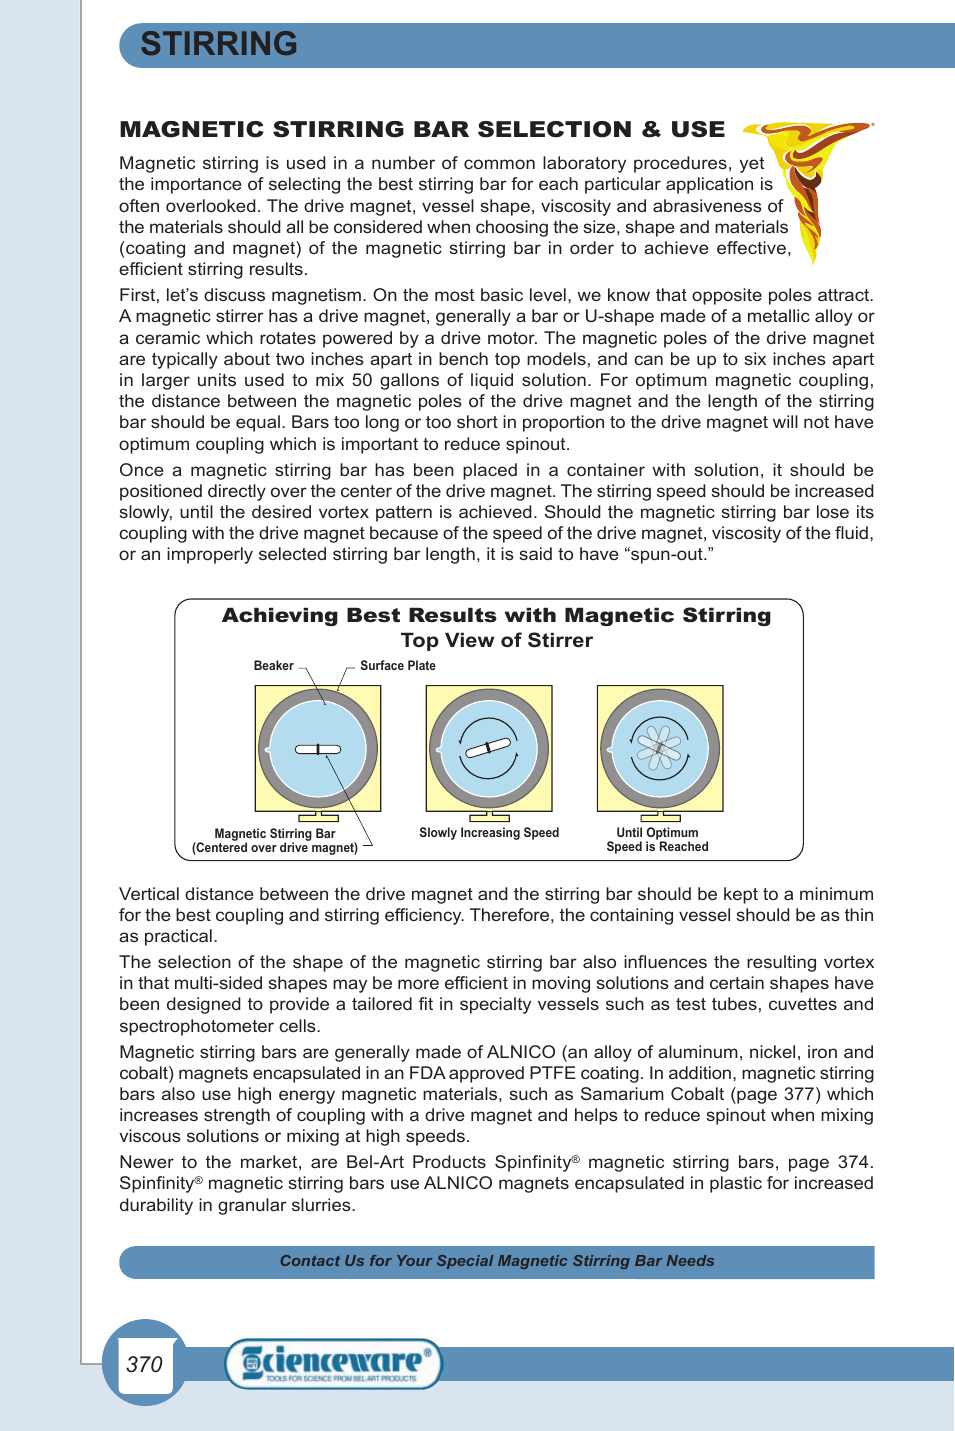 Bel-Art Magnetic Stirring Bars Selection & Use Guide